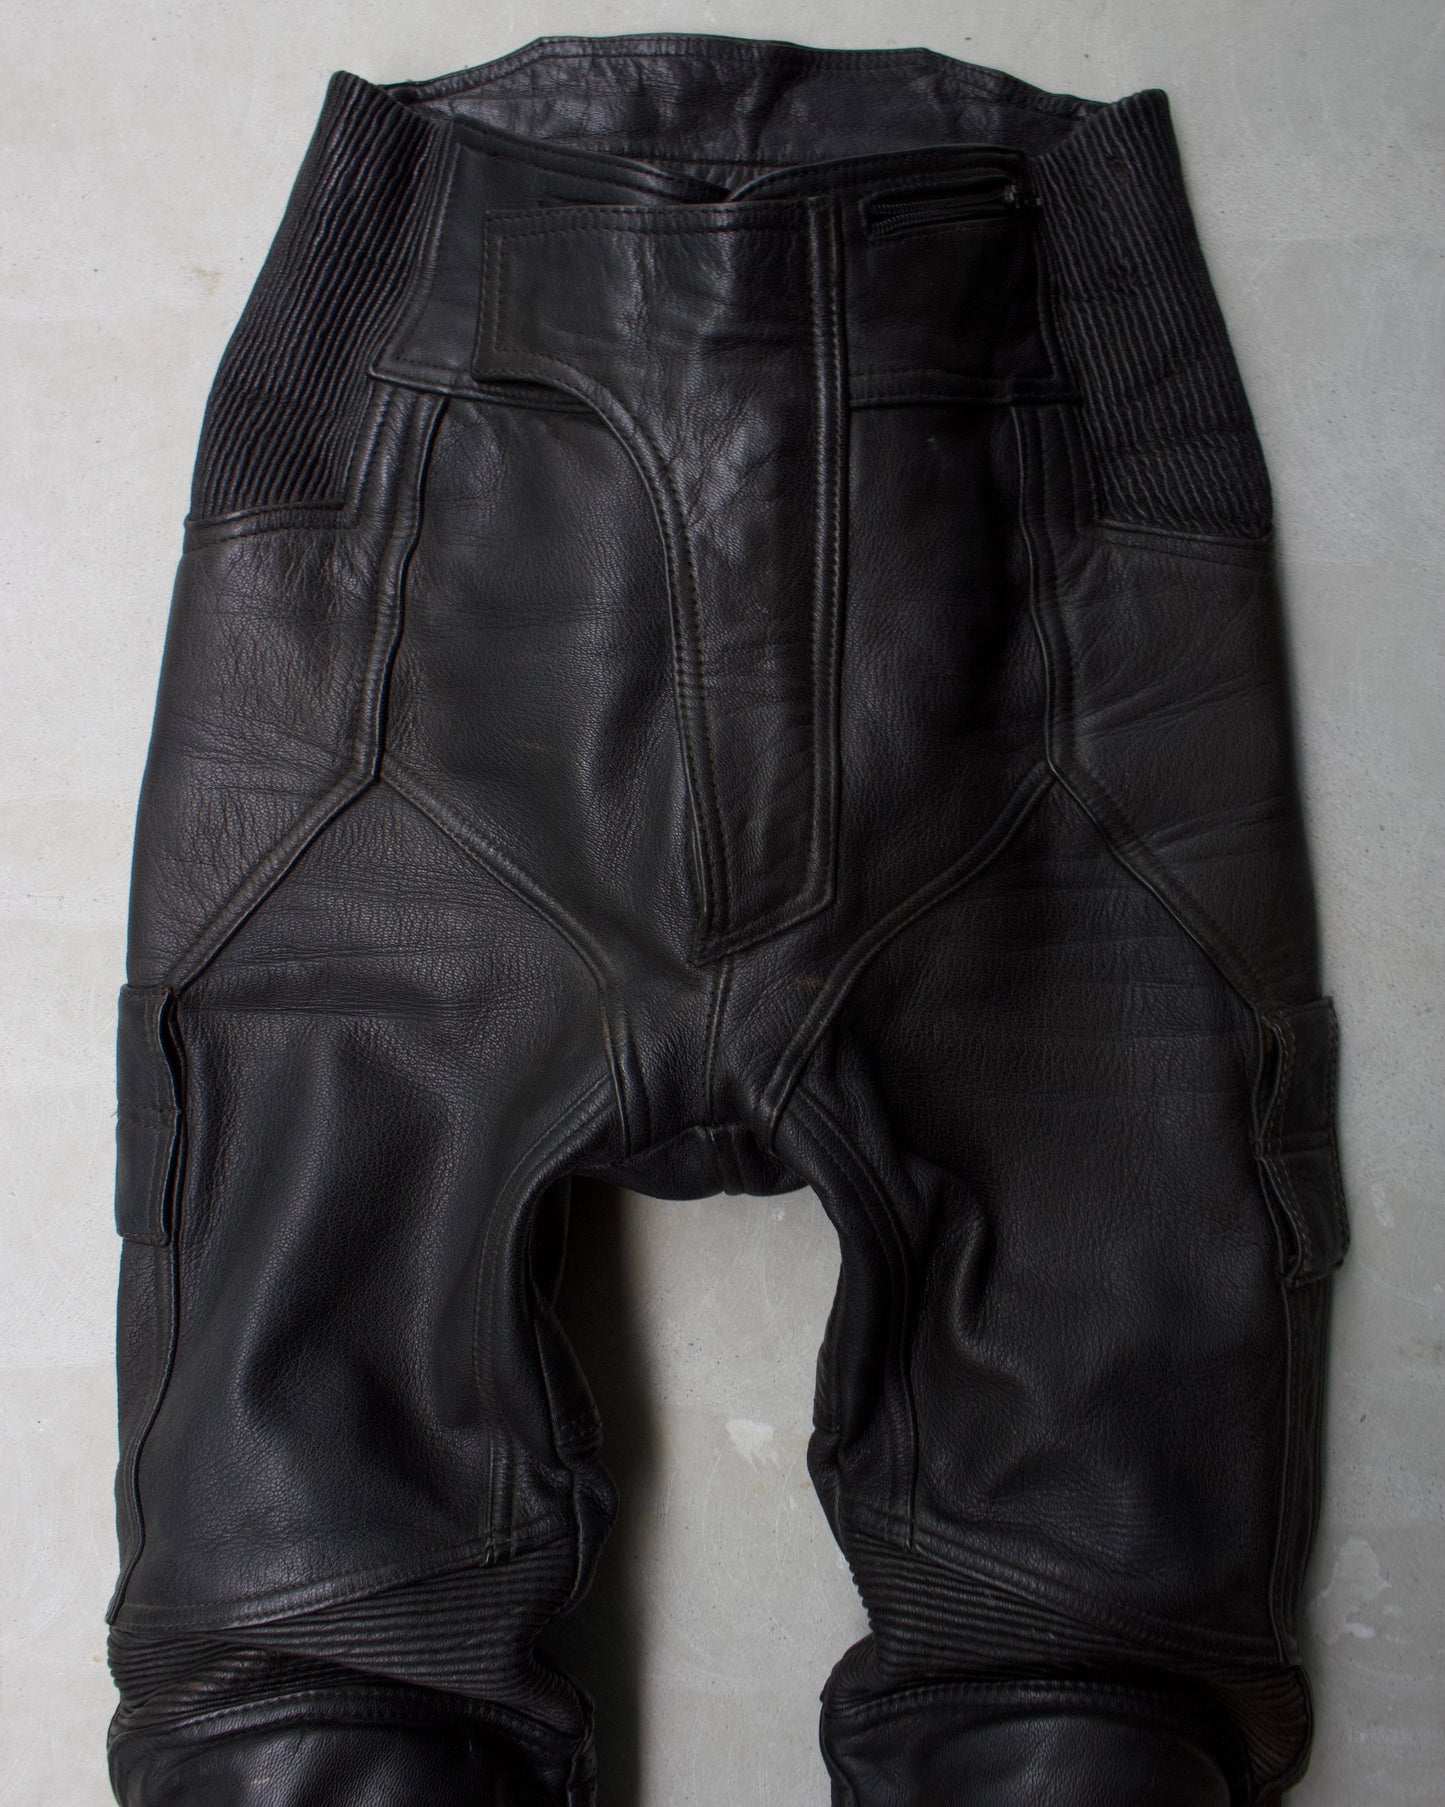 Kadoya K’s Leather Early 00s Cowhide Padded Motorcycle Pants